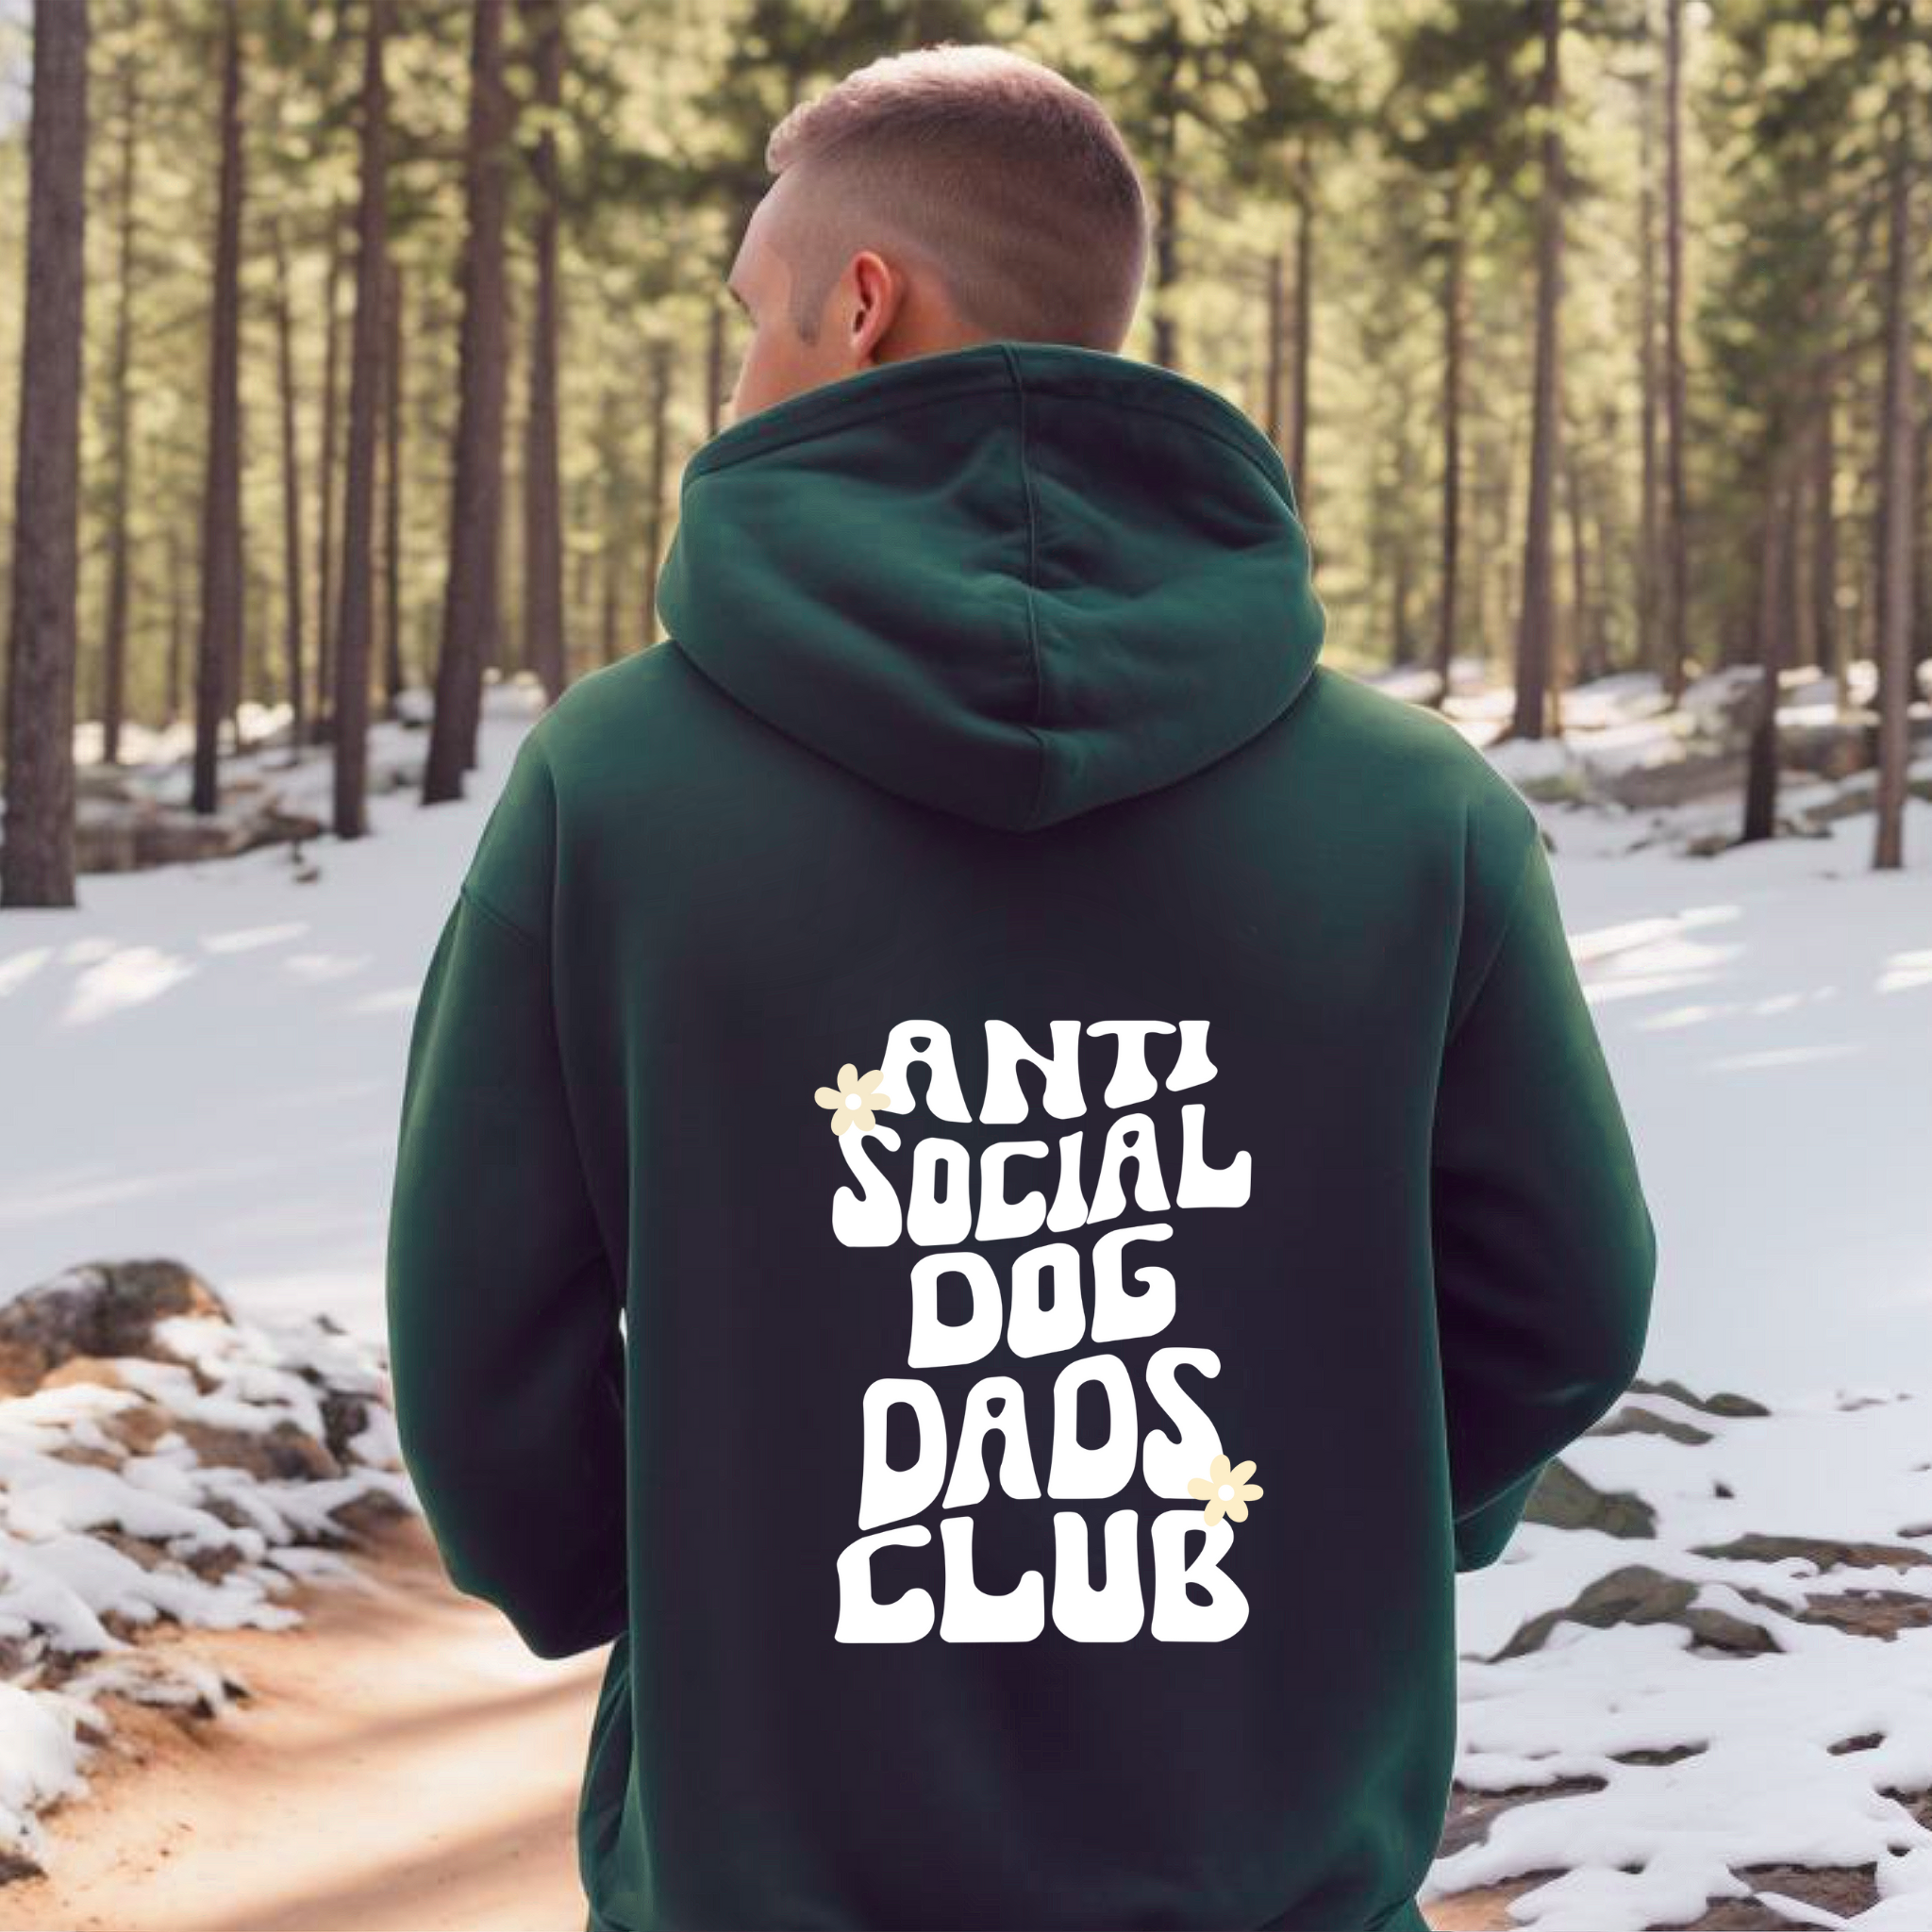 'Anti social dog dads club' hoodie